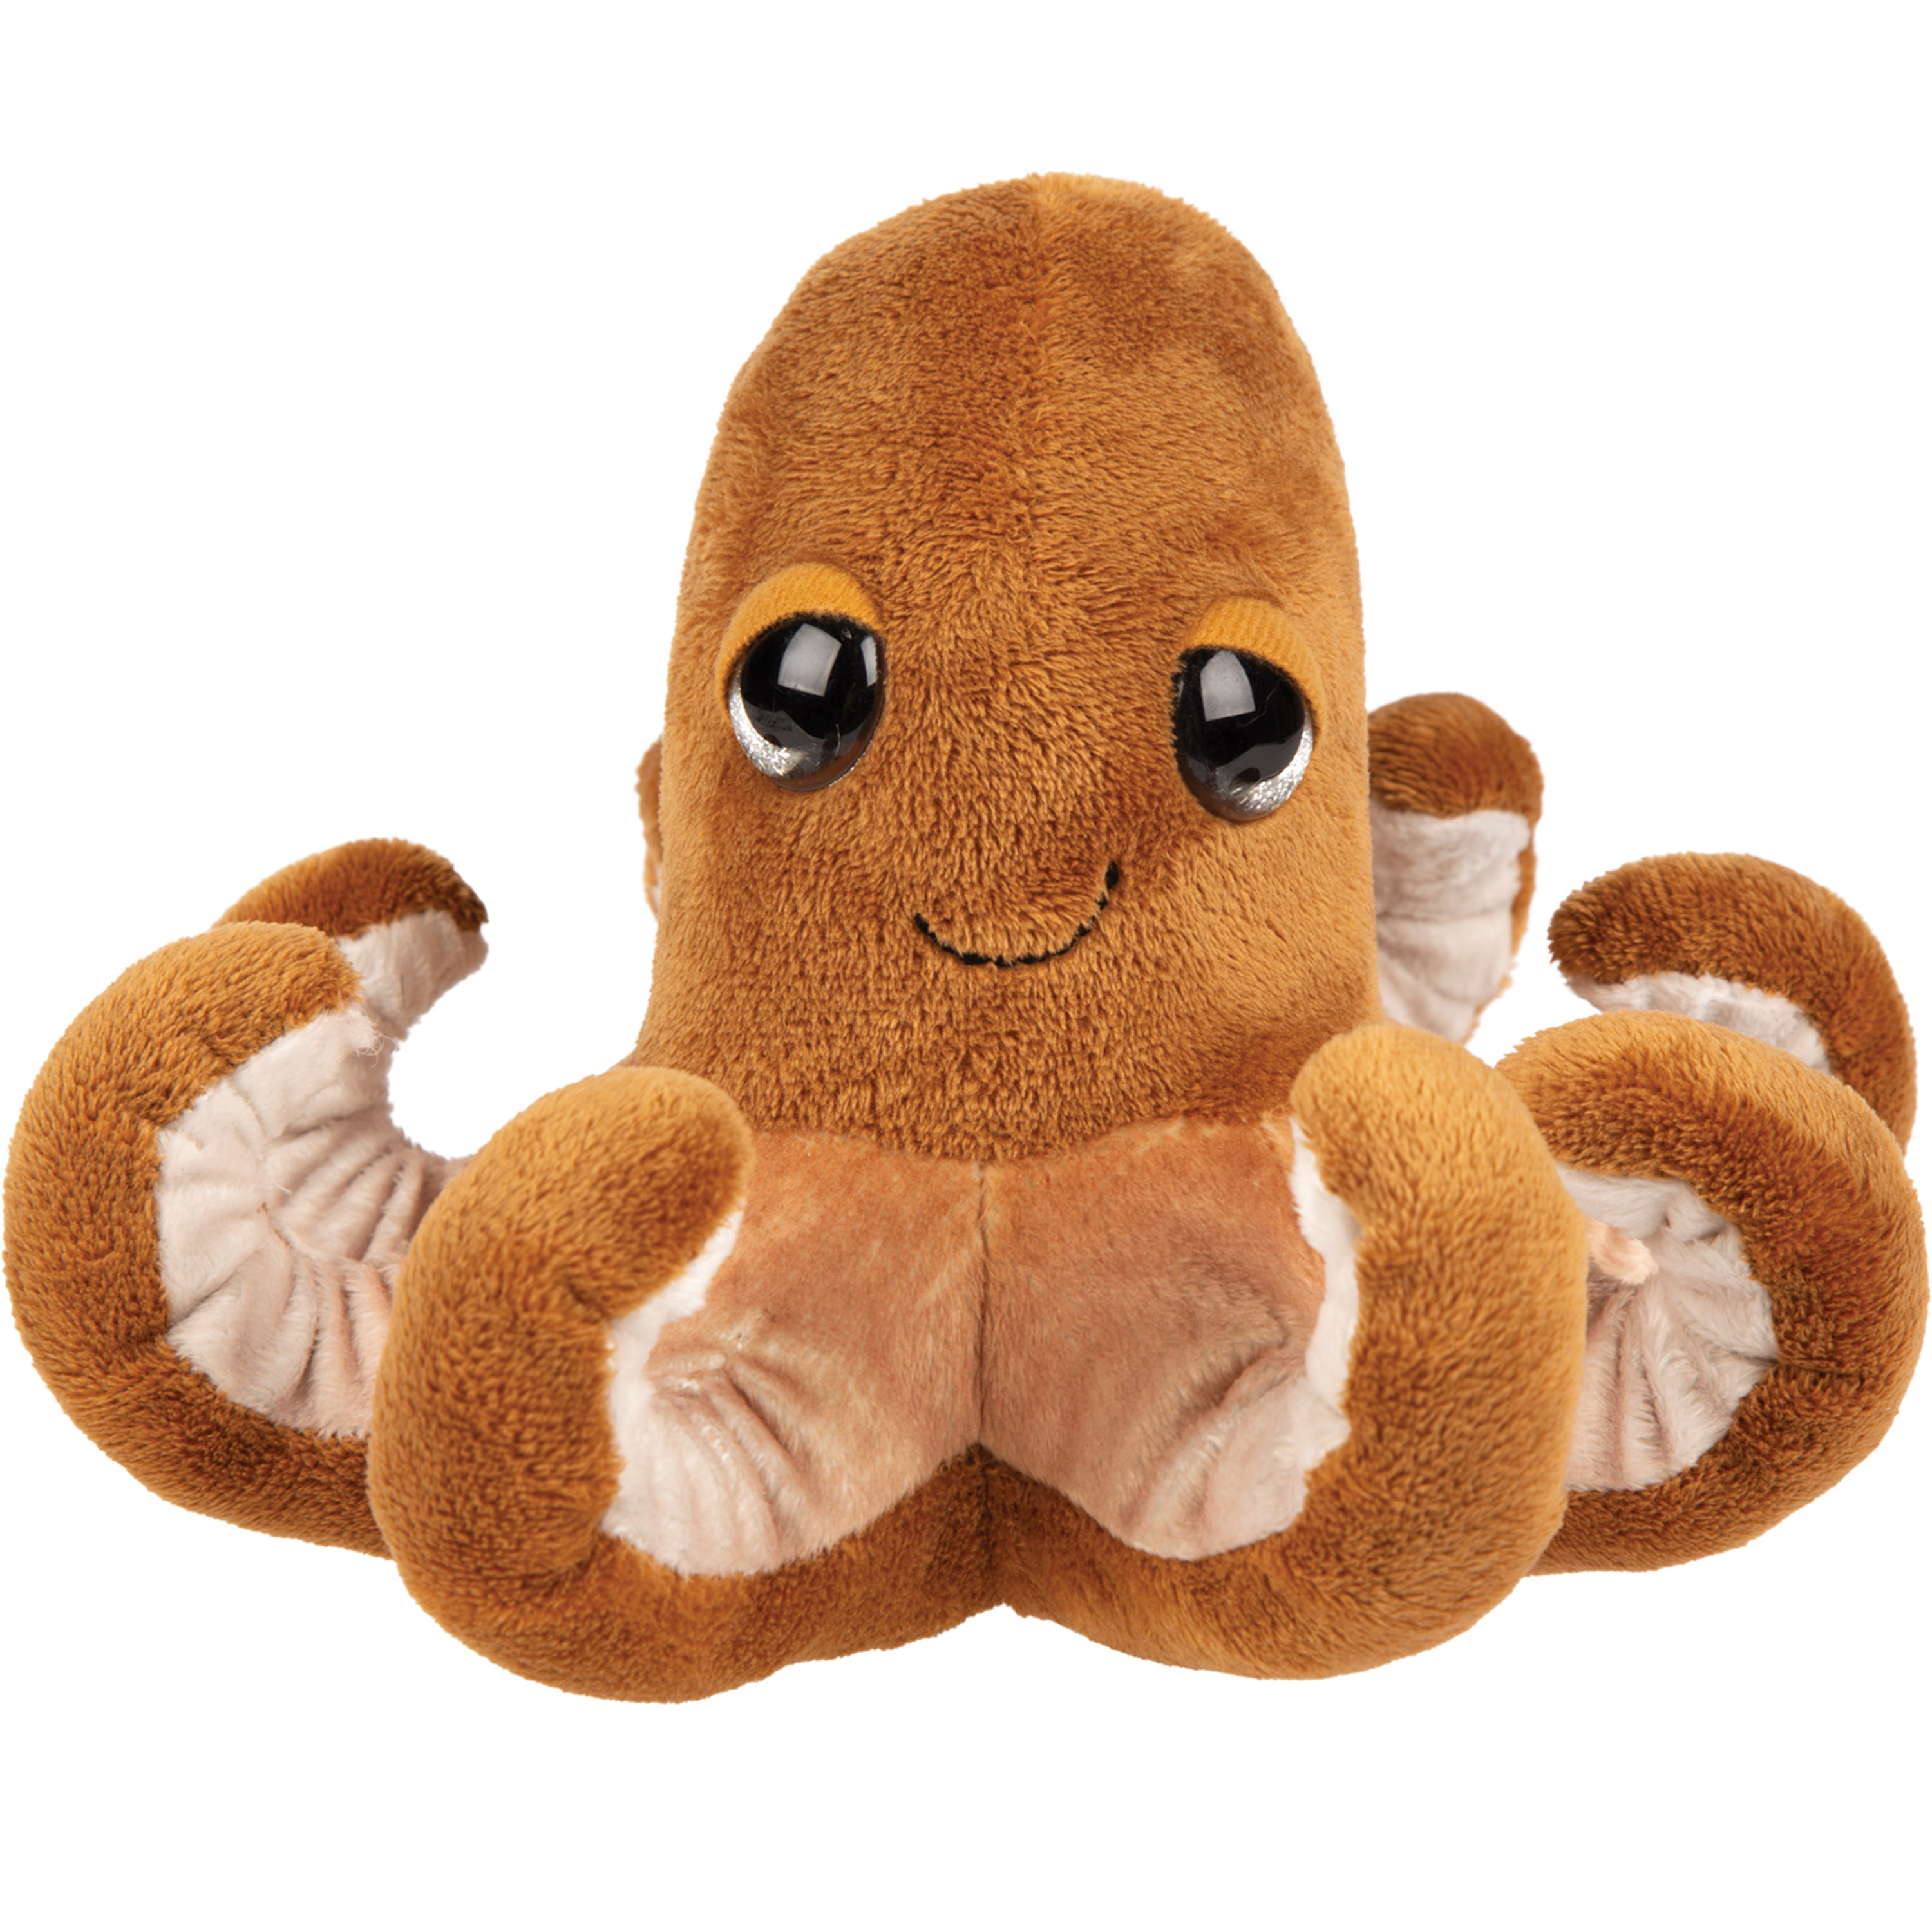 Suki Gifts pluche inktvis/octopus knuffeldier - cute eyes - bruin - 15 cm